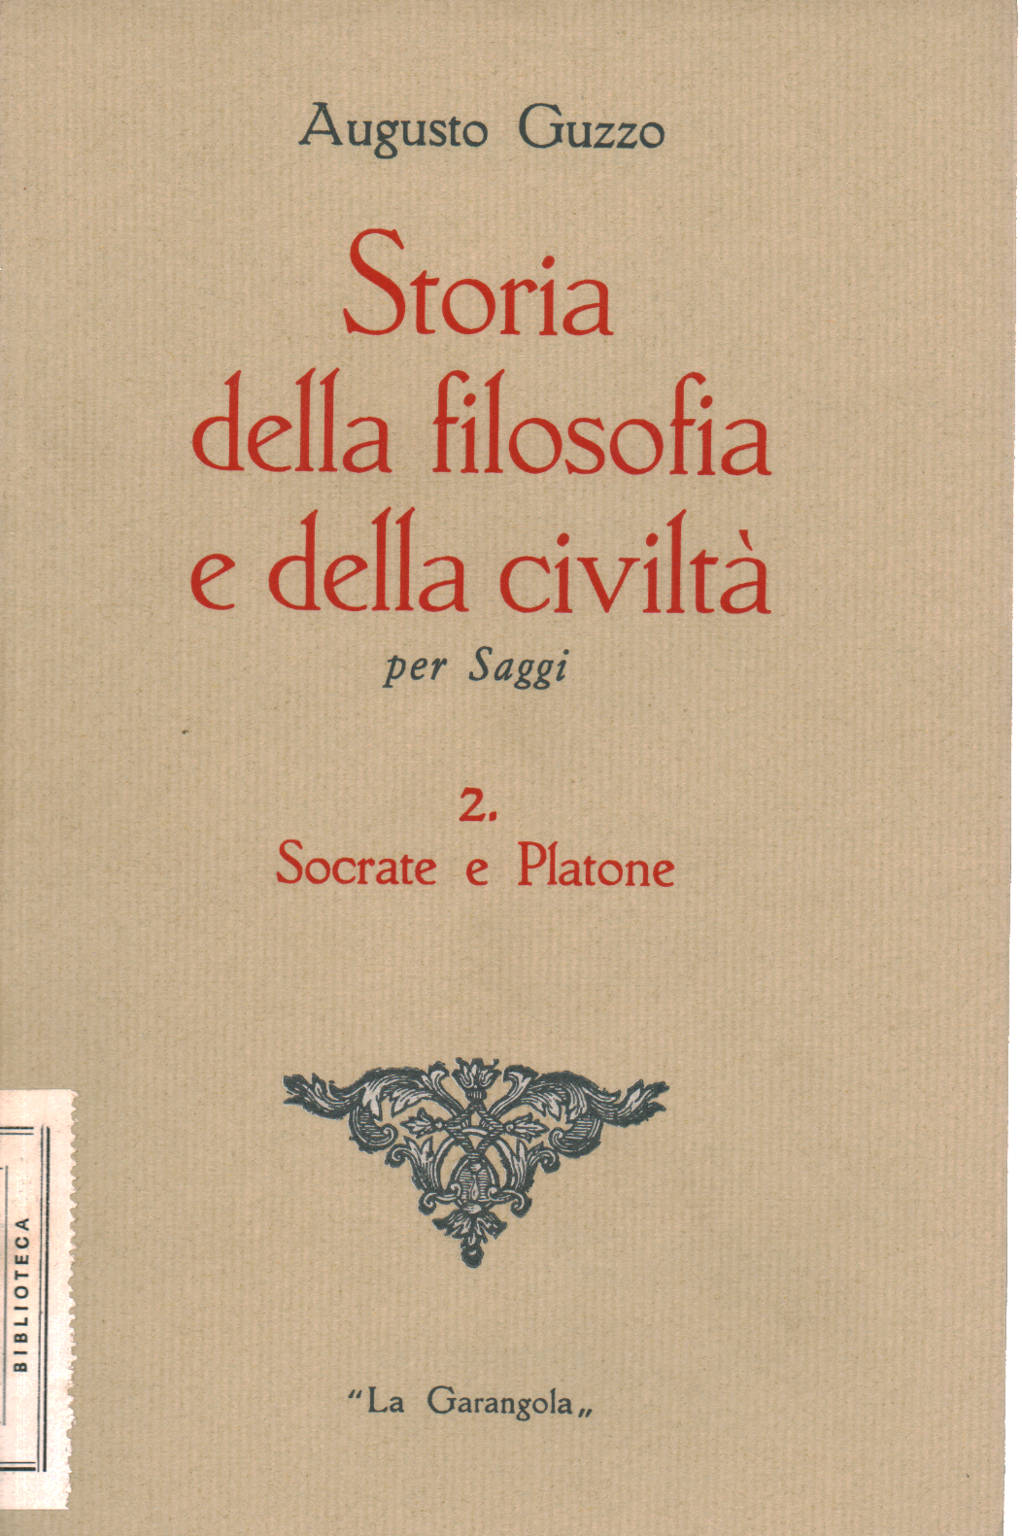 Sokrates und Platon, Augusto Guzzo